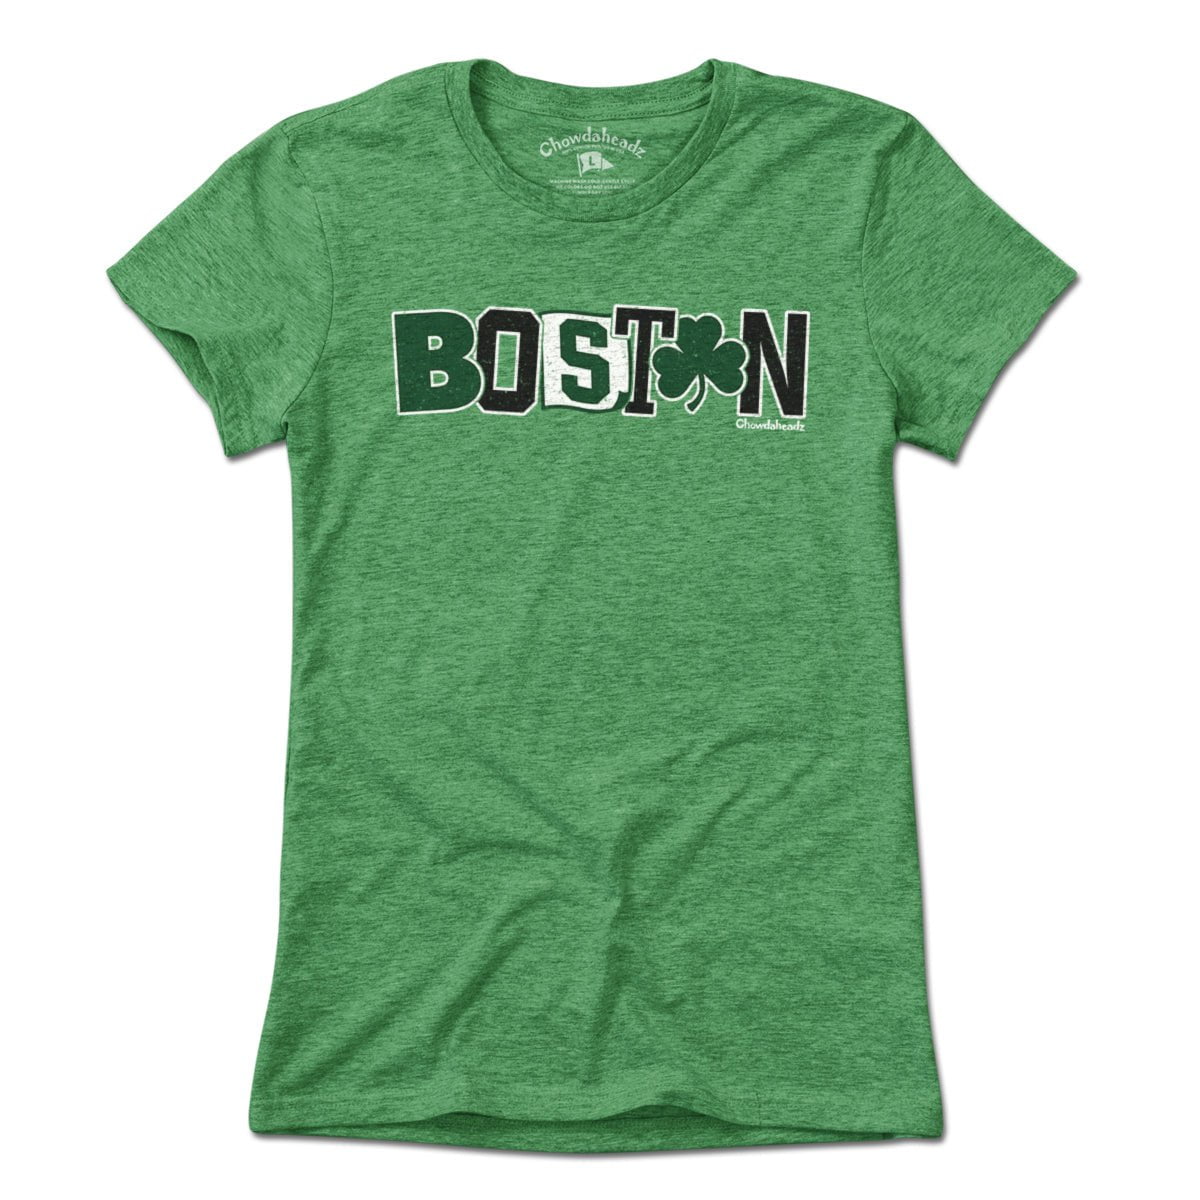 Boston Basketball Pride T-Shirt - Chowdaheadz